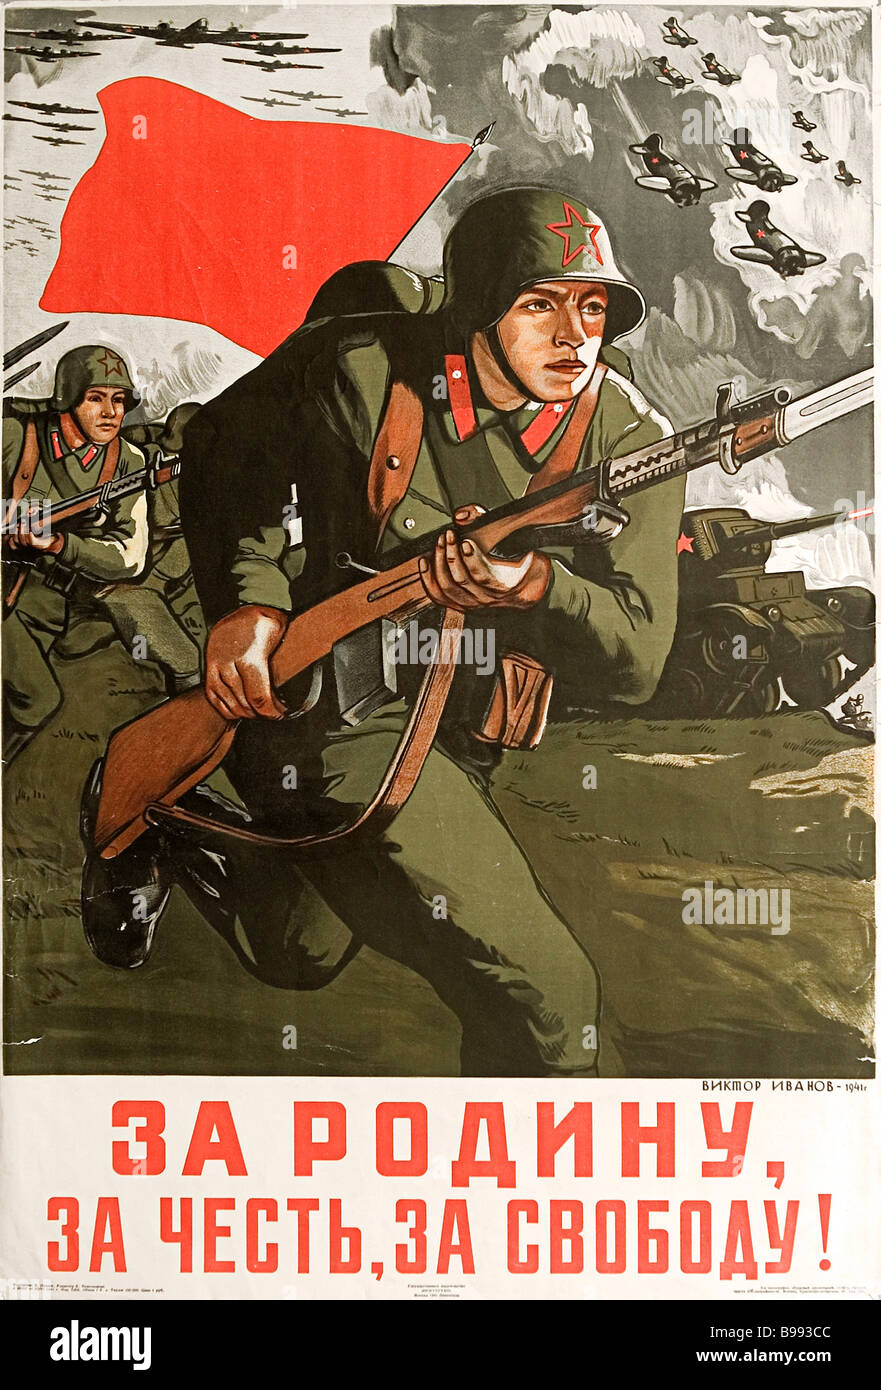 Viktor Ivanov For Motherland honor and freedom Poster 1941 Stock Photo ...